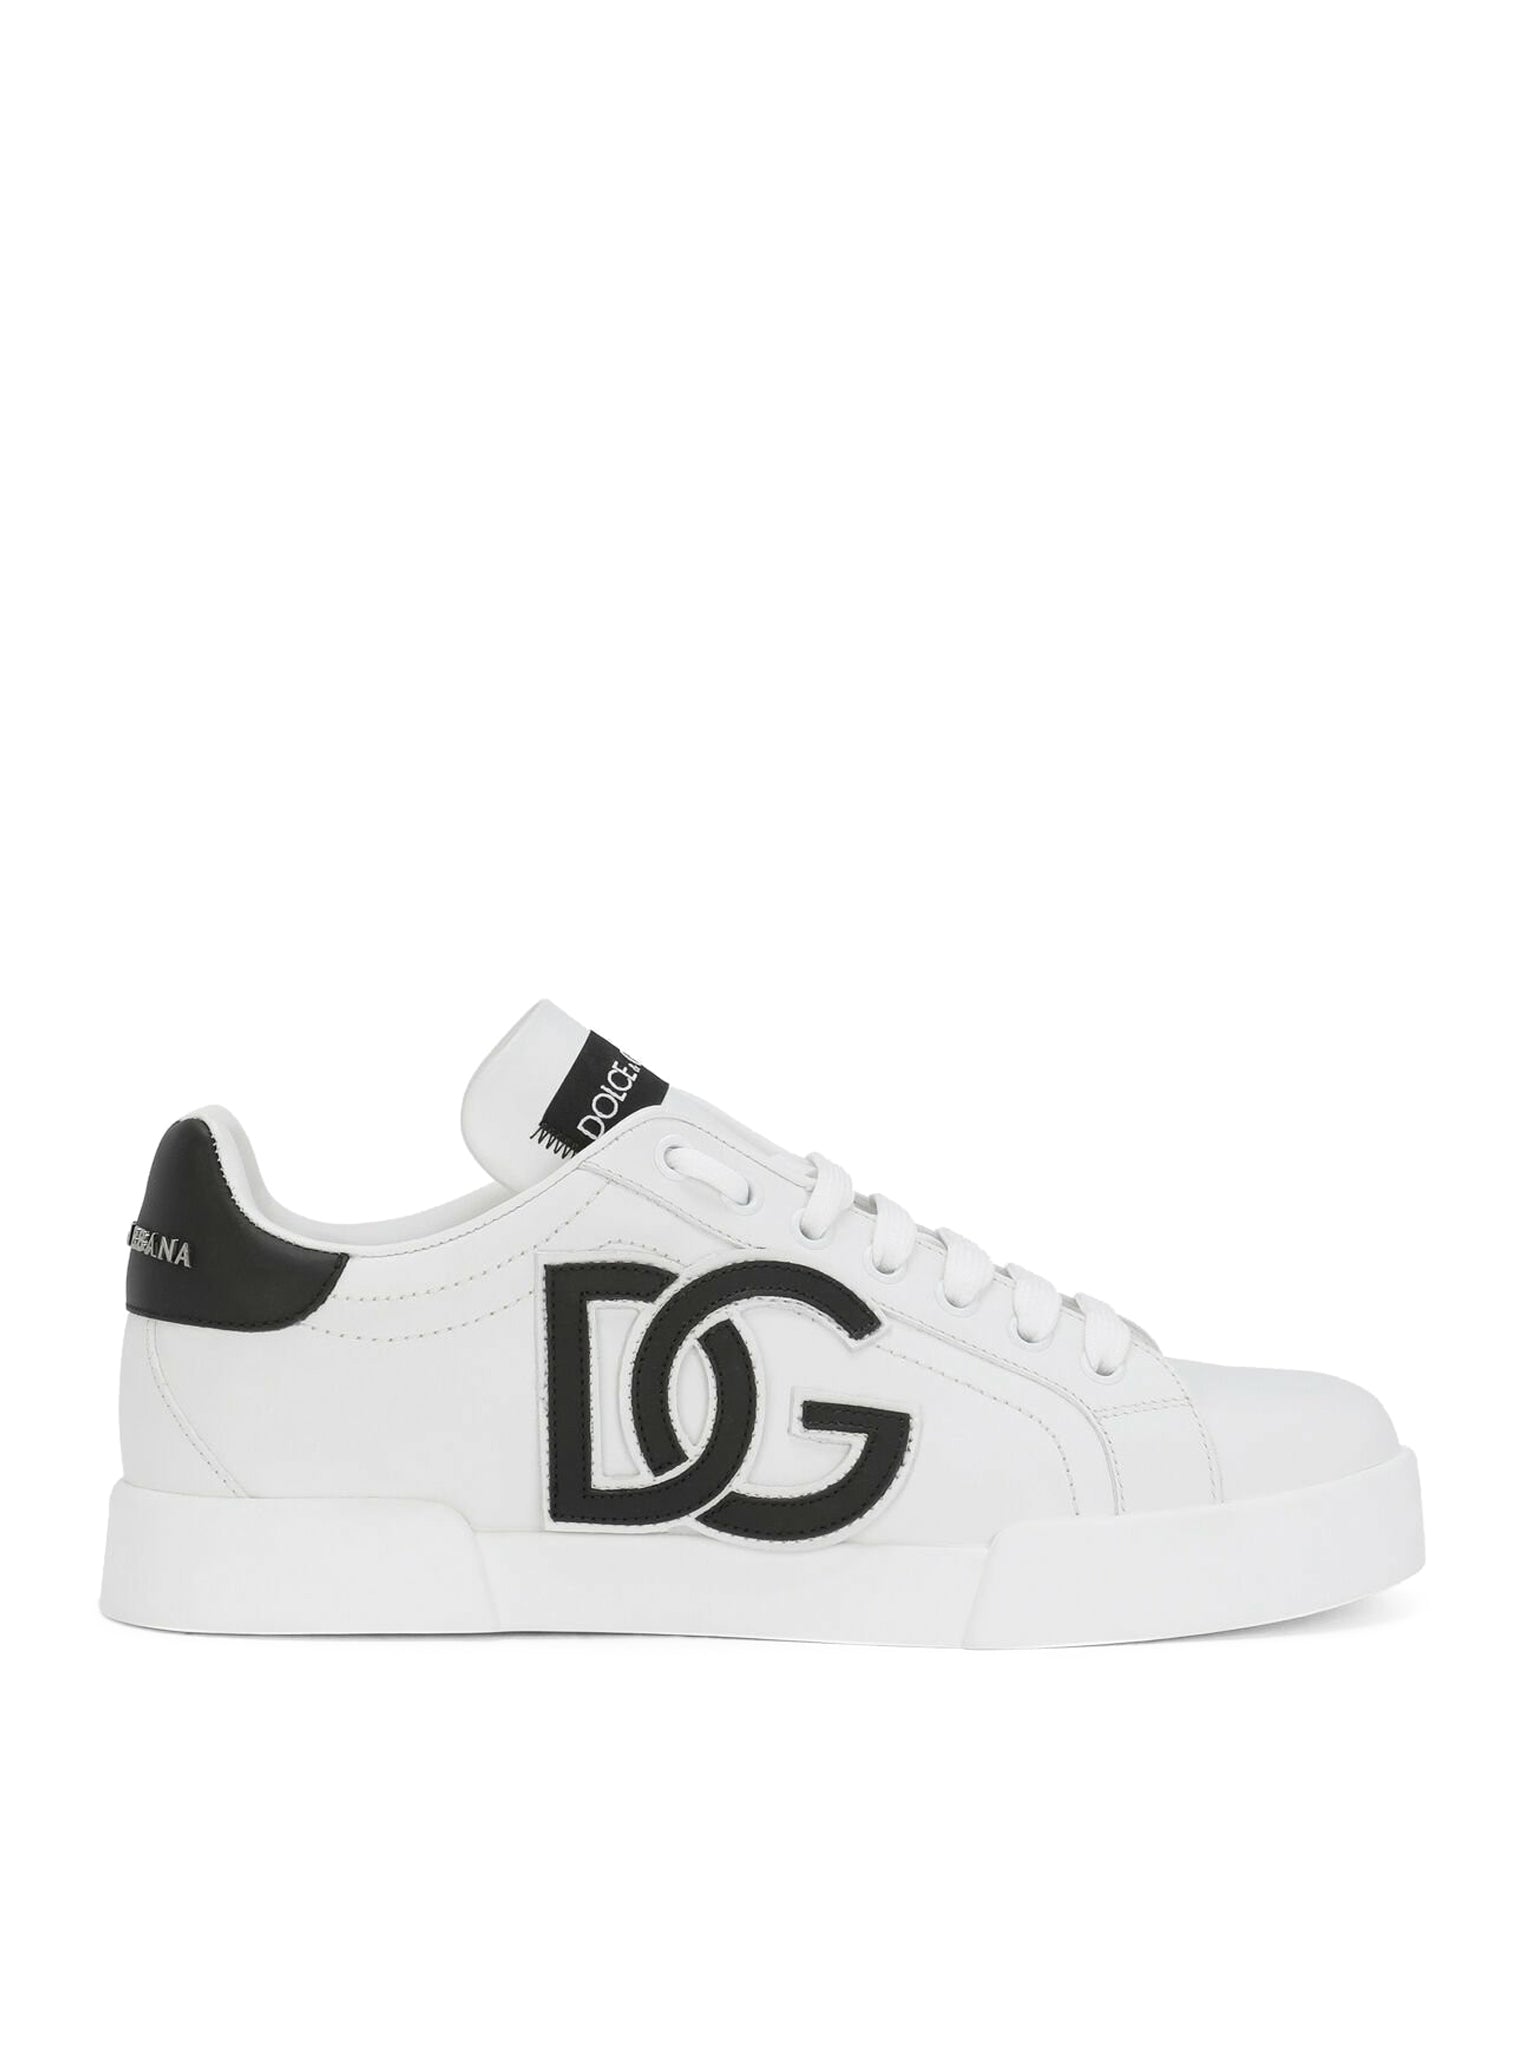 Portofino sneaker in calfskin with DG logo